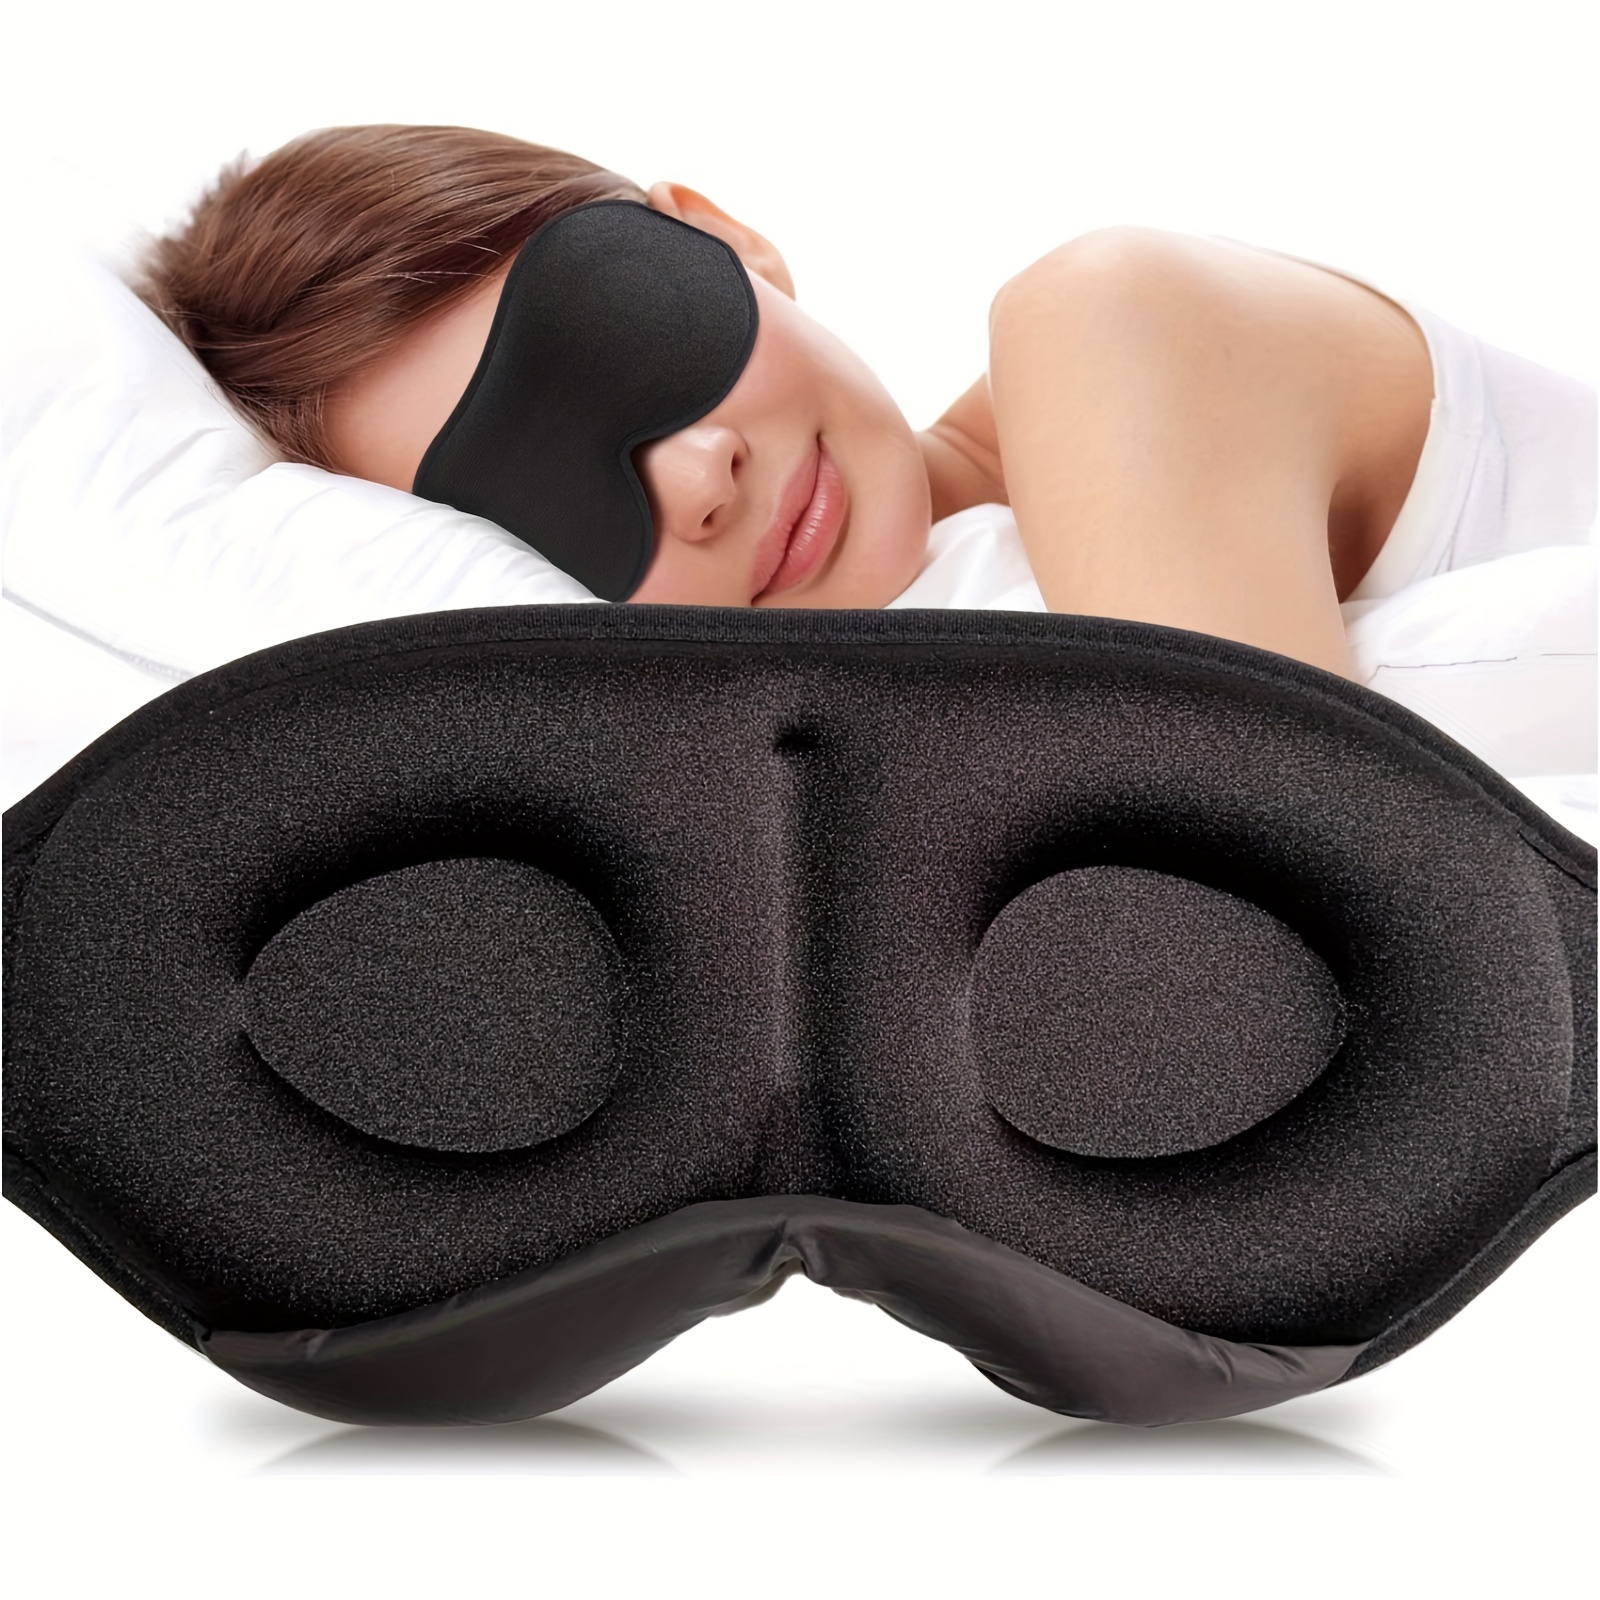 3D Sleep Mask, New Arrival Sleeping Eye Mask for Women Men, Contoured Cup  Night Blindfold, Luxury